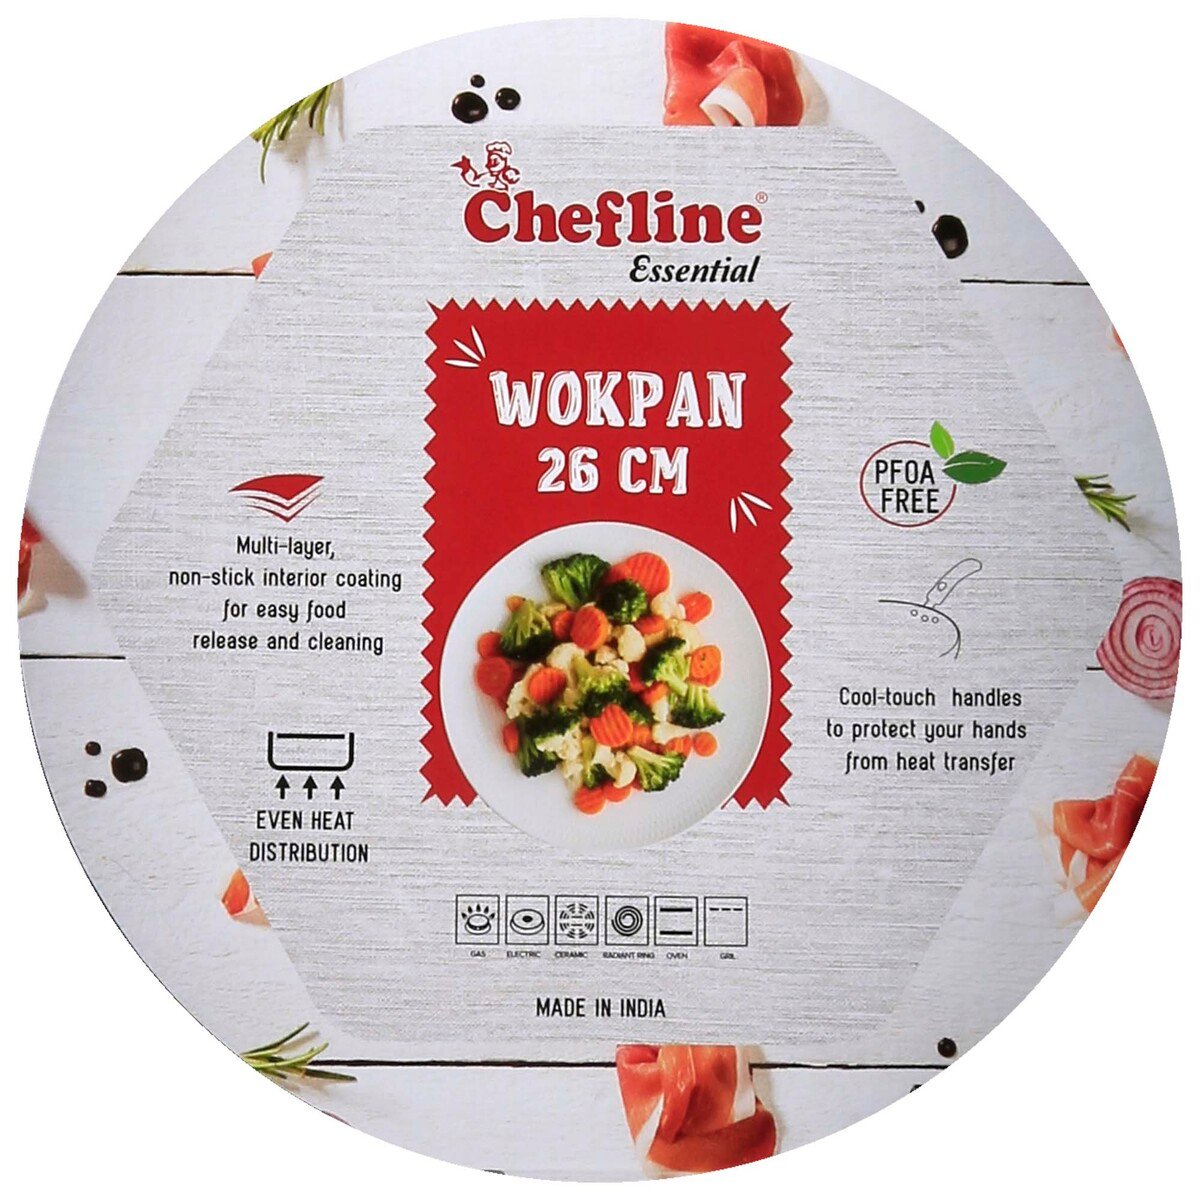 Chefline Non-Stick Wok Pan, 26 cm, ESNLINDWP26